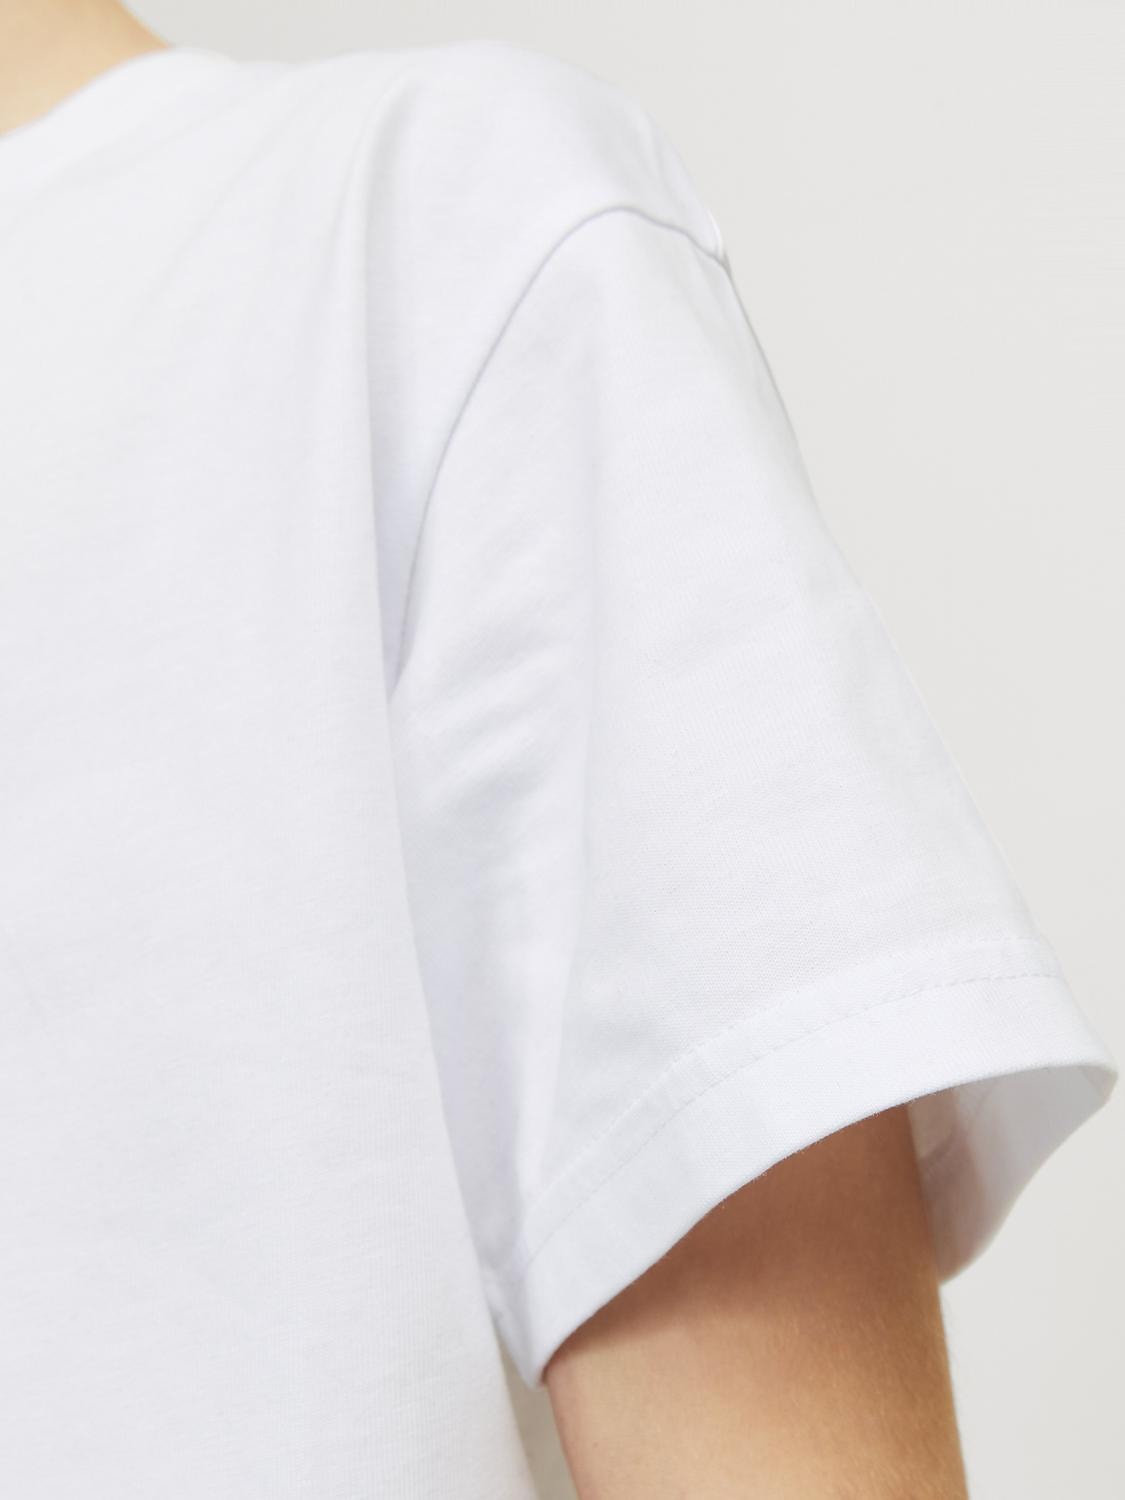 Jack & Jones T-shirt Uni Pour les garçons -White - 12254288